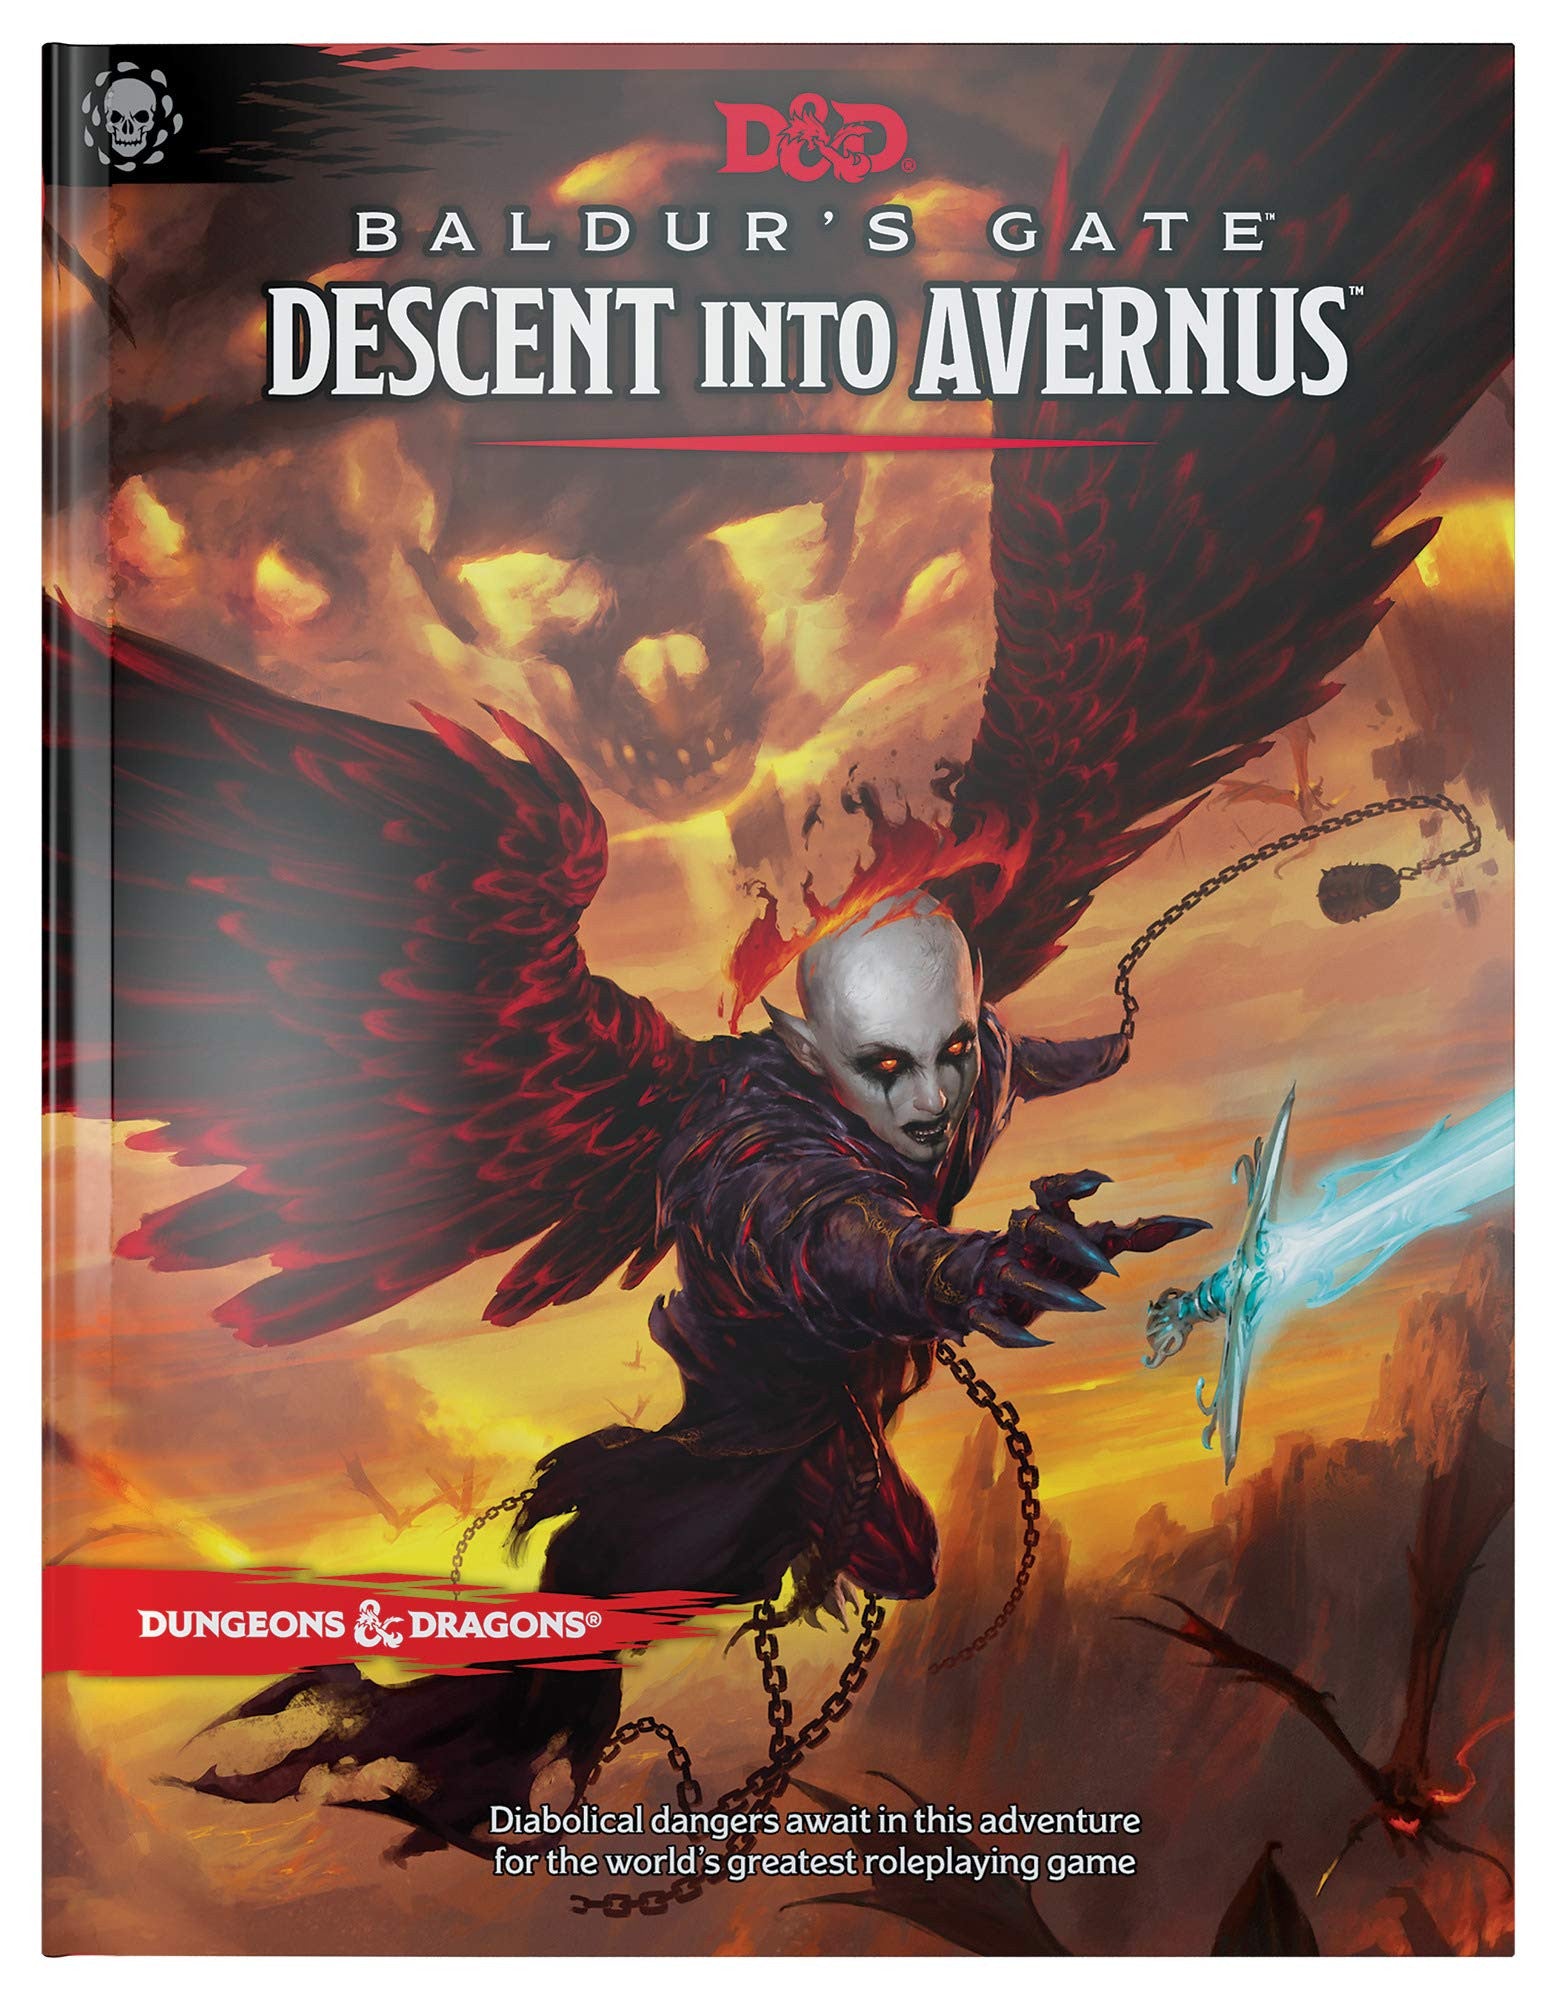 D&D Dungeons & Dragons Baldurs Gate Descent into Avernus Hardcover